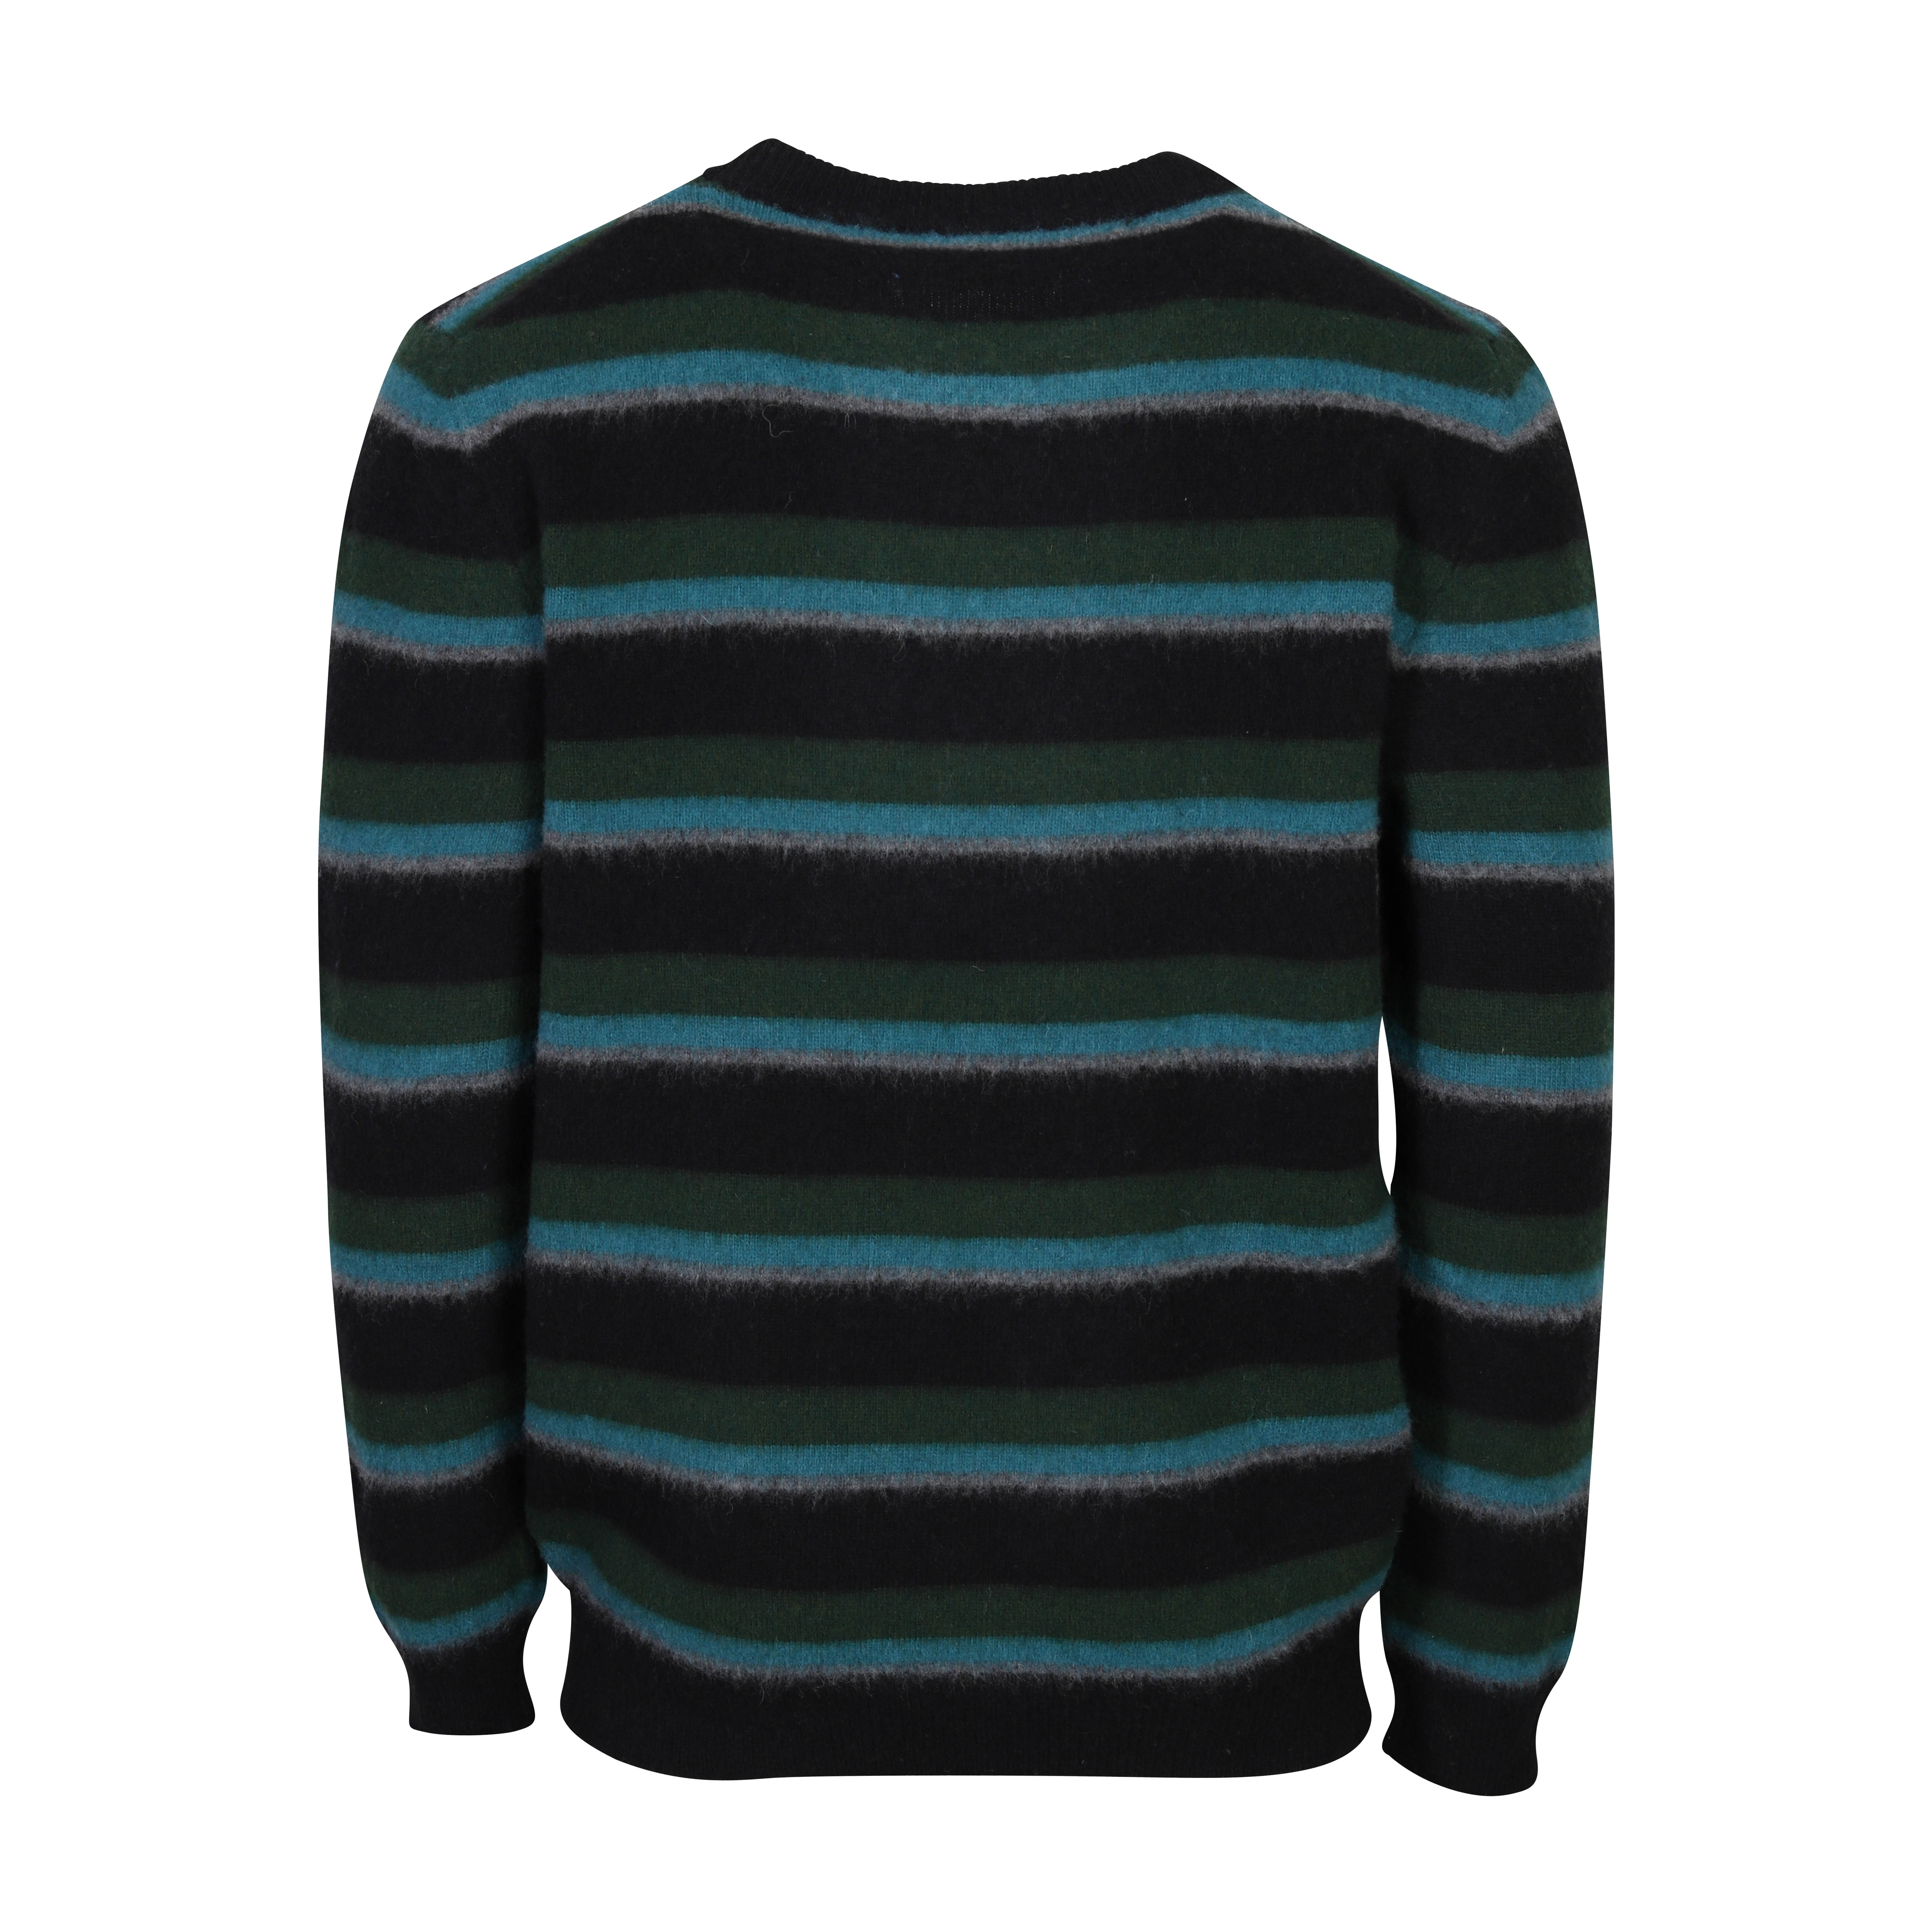 Aspesi Fleece Knit Pullover Striped